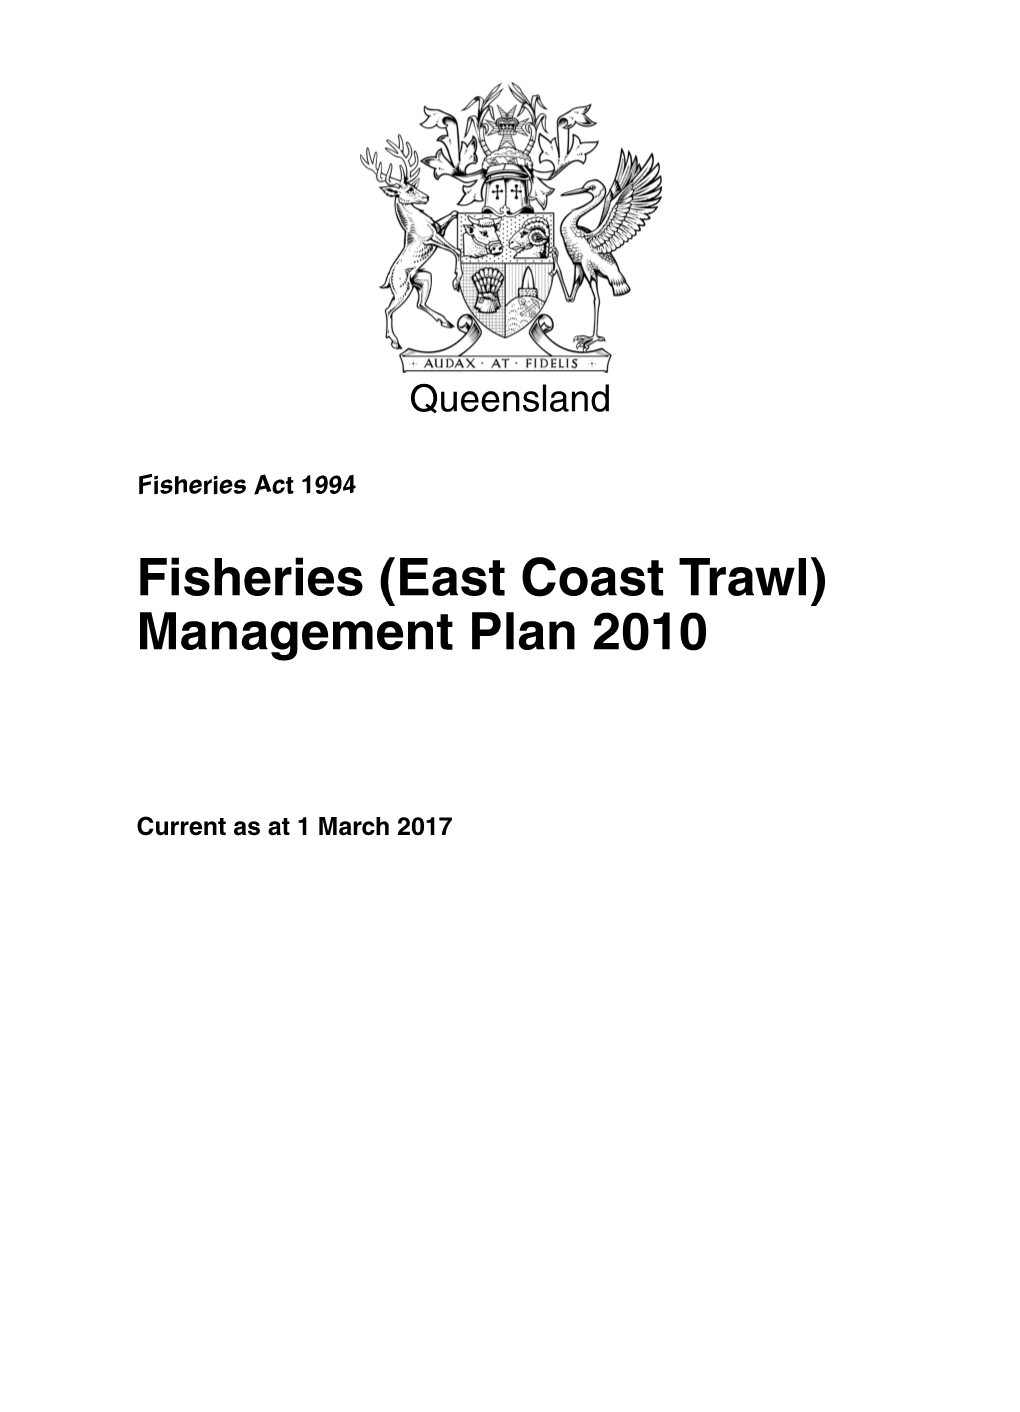 Fisheries (East Coast Trawl) Management Plan 2010